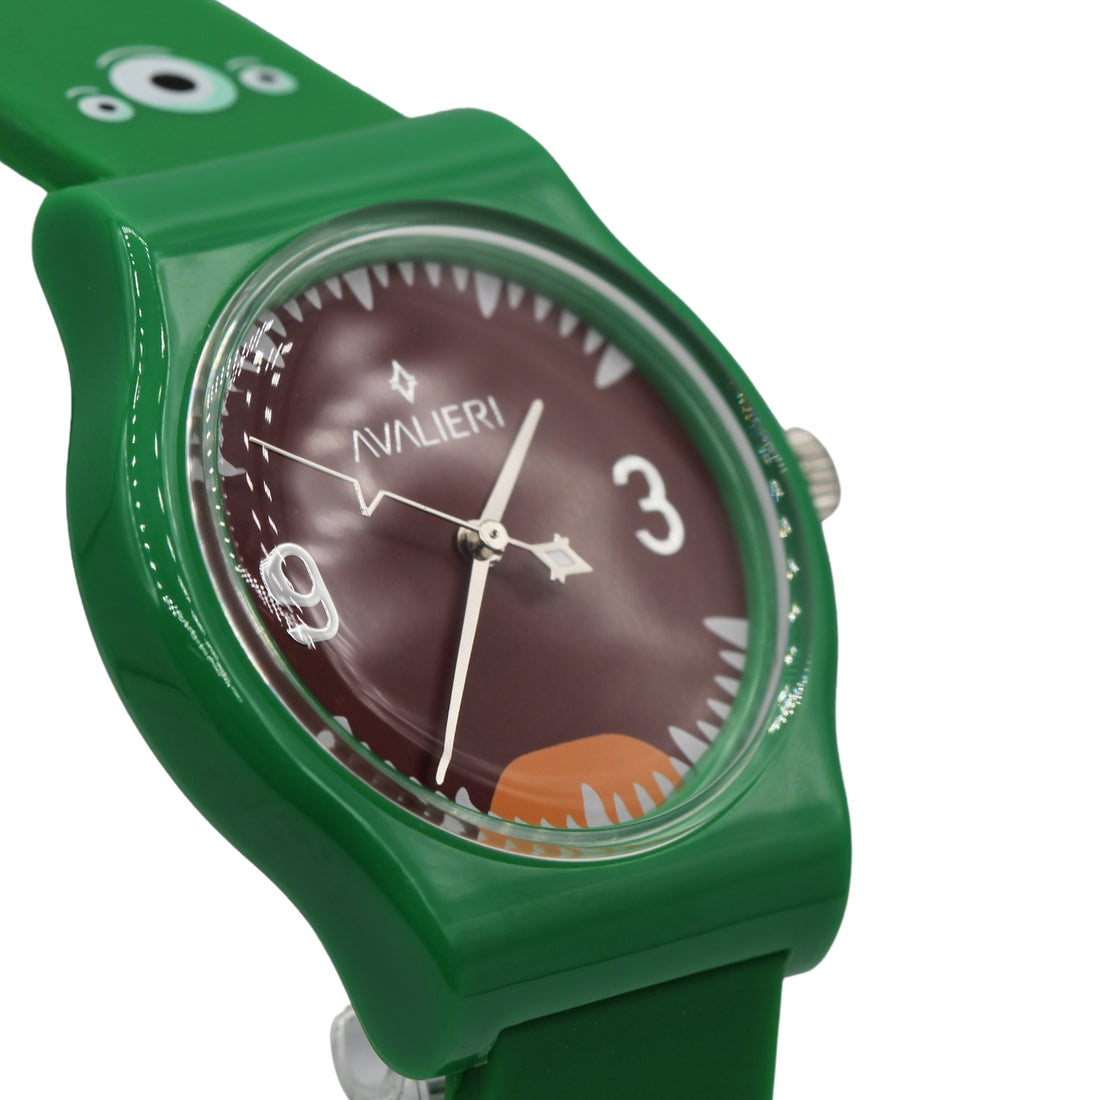 Avalieri Kids' Quartz Watch, Brown Dial - AVK-0003